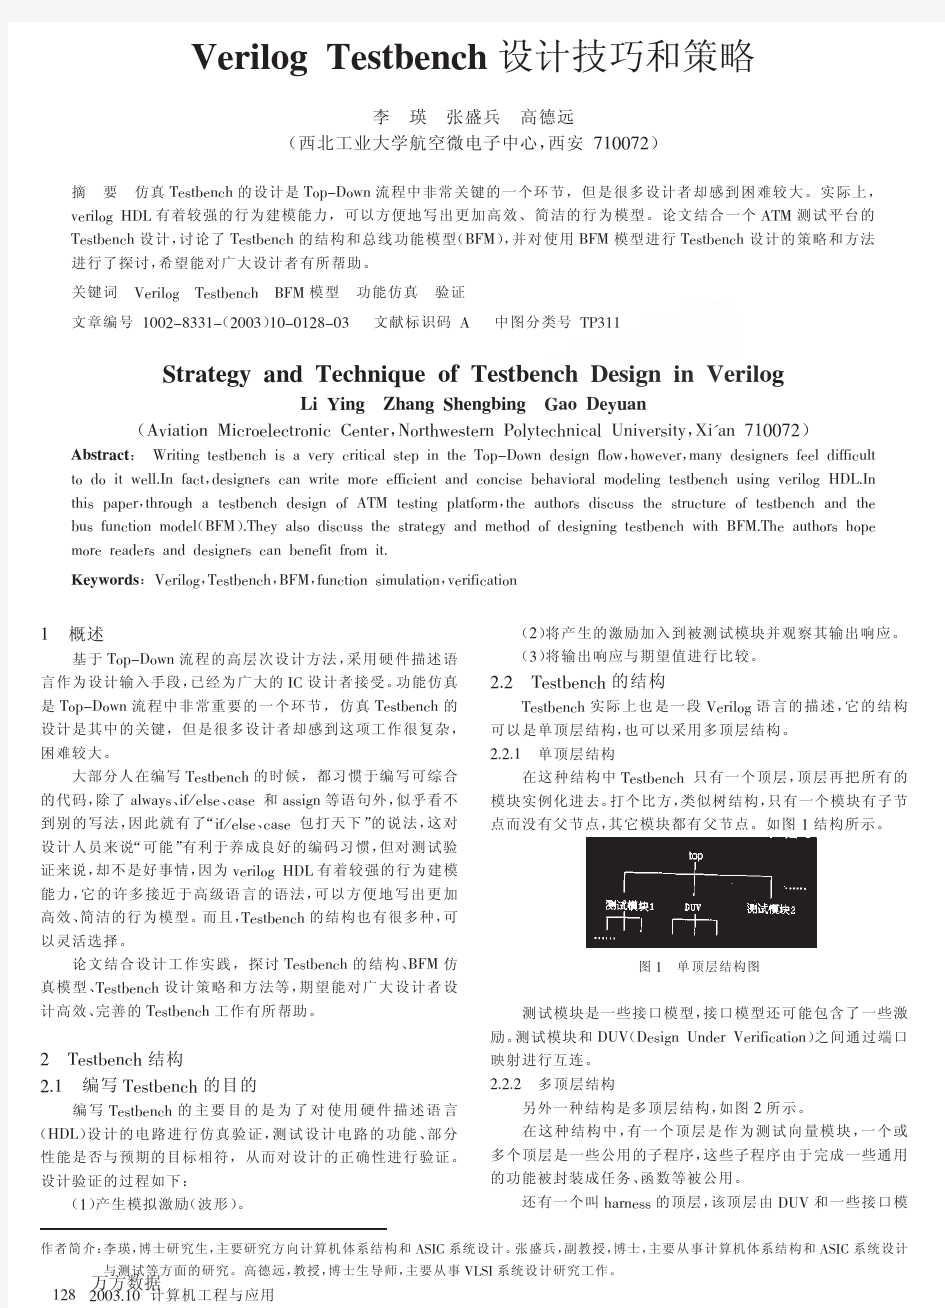 Verilog+Testbench设计技巧和策略